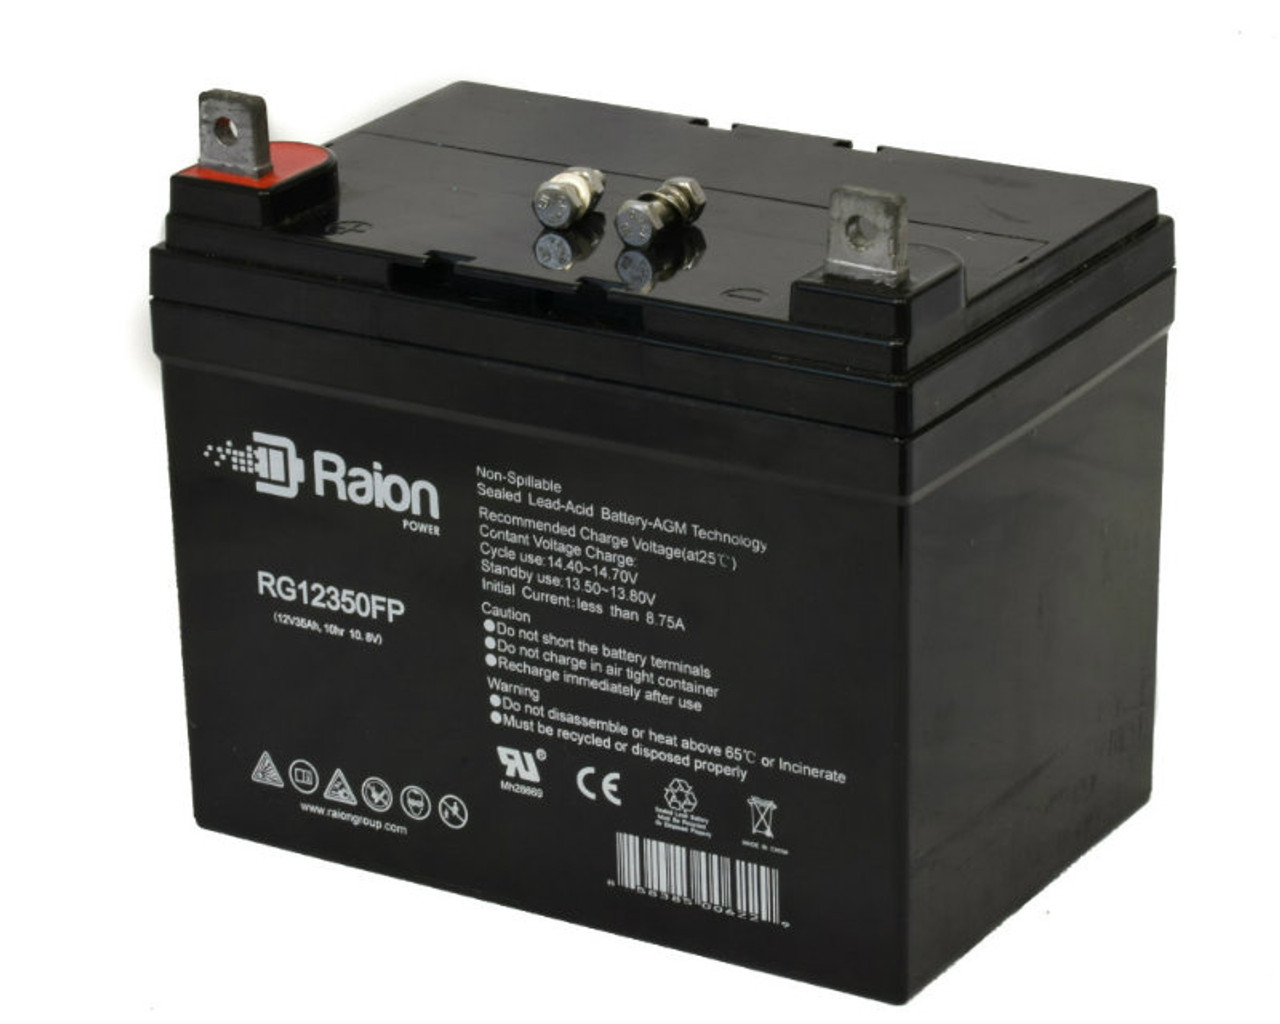 Raion Power 12V 35Ah Replacement UPS Battery Cartridge for Best Power FERRUPS MD 500VA